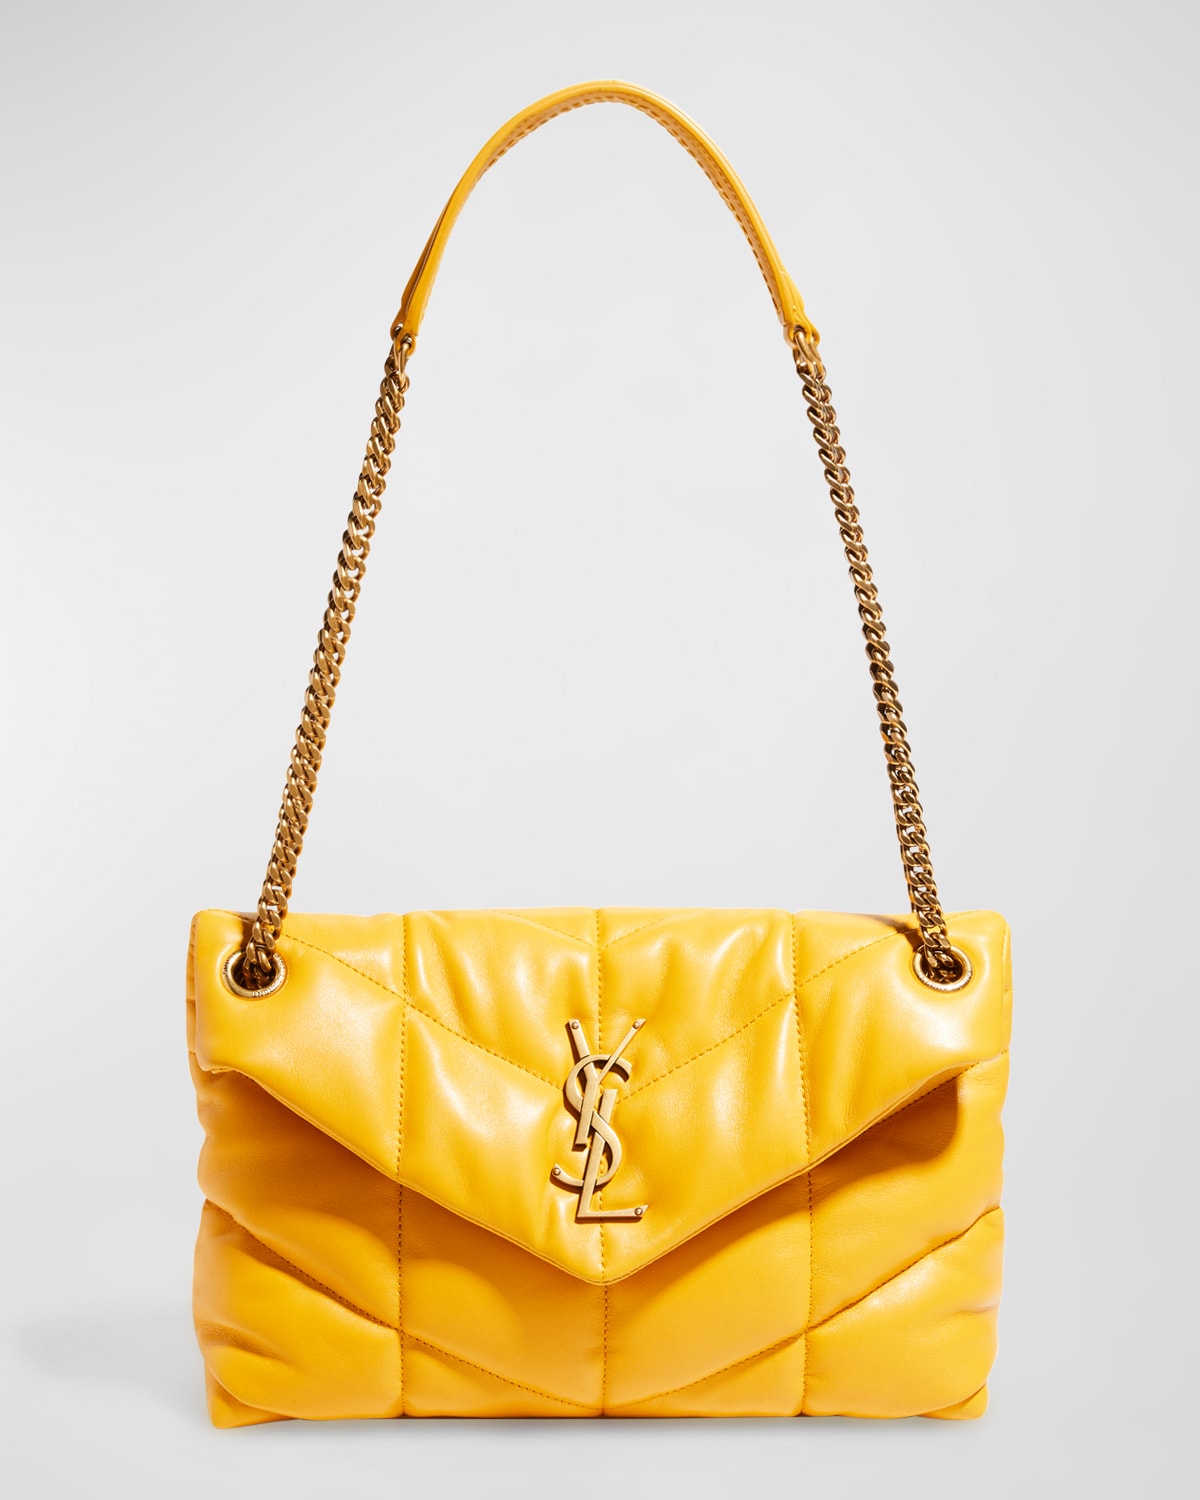 Saint Laurent Manhattan Small Ysl Box Leather Shoulder Bag, Nero, Women's, Handbags & Purses Shoulder Bags